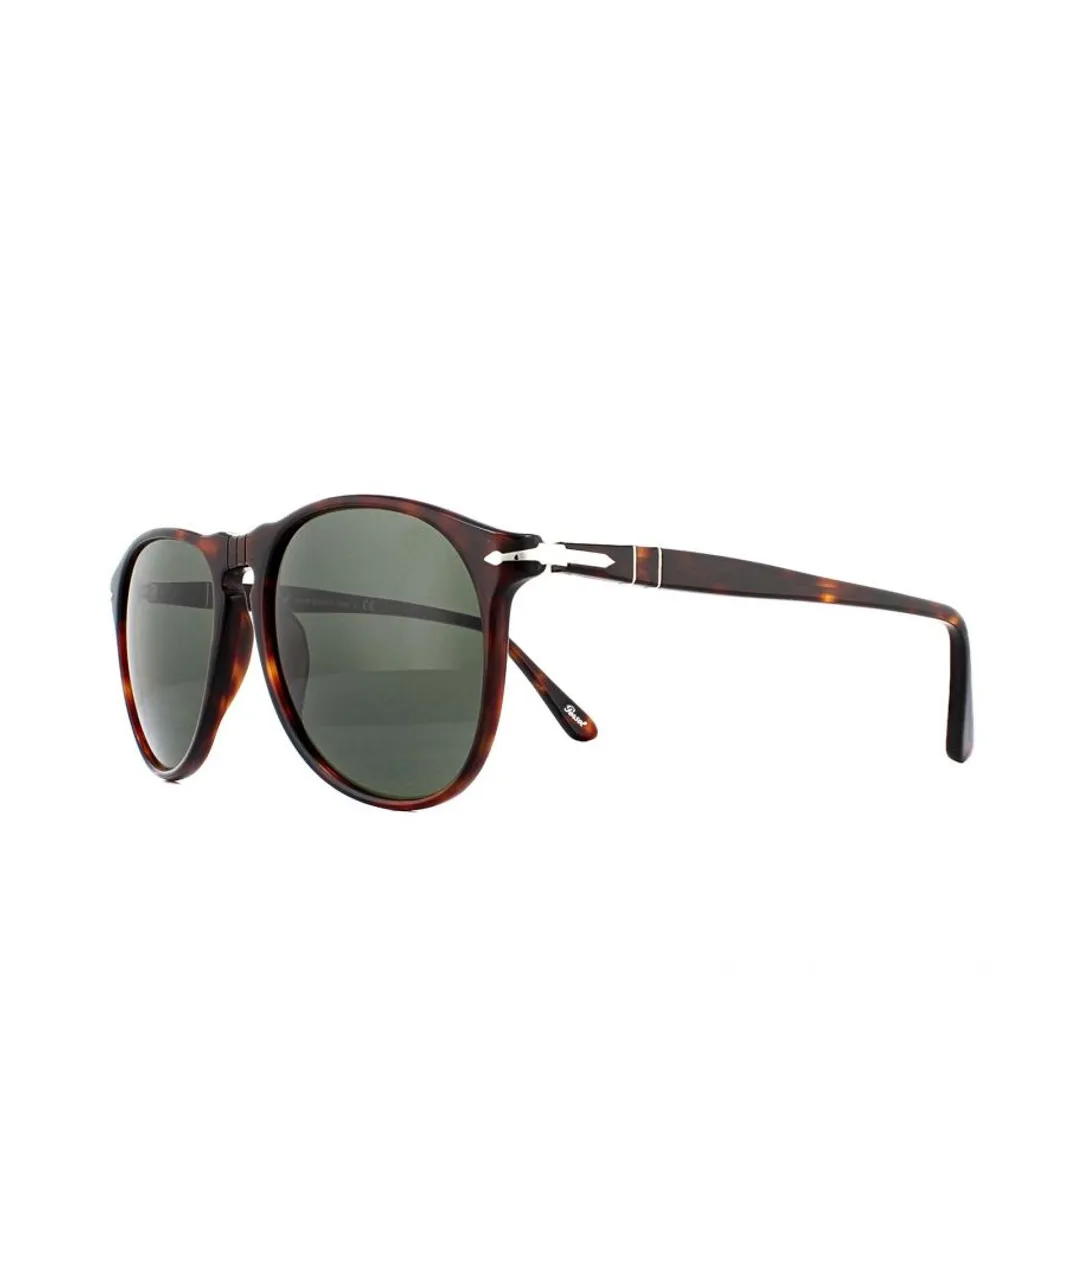 Persol Mens Sunglasses 9649 24/31 Havana Grey - Brown - One